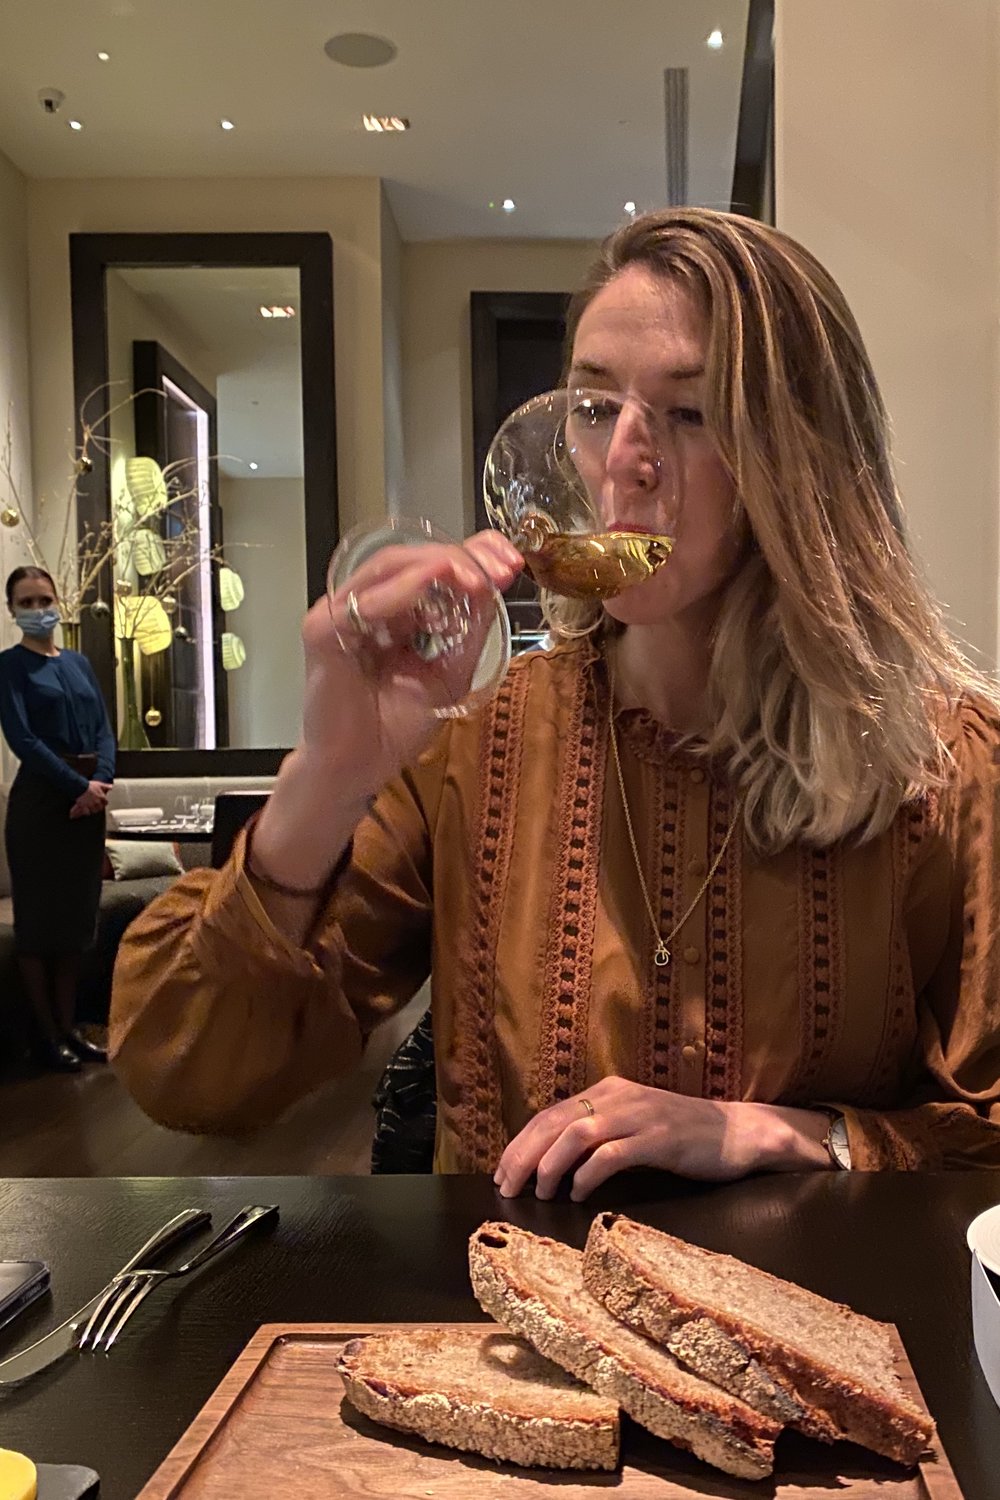 Katy sipping Chenin Blanc